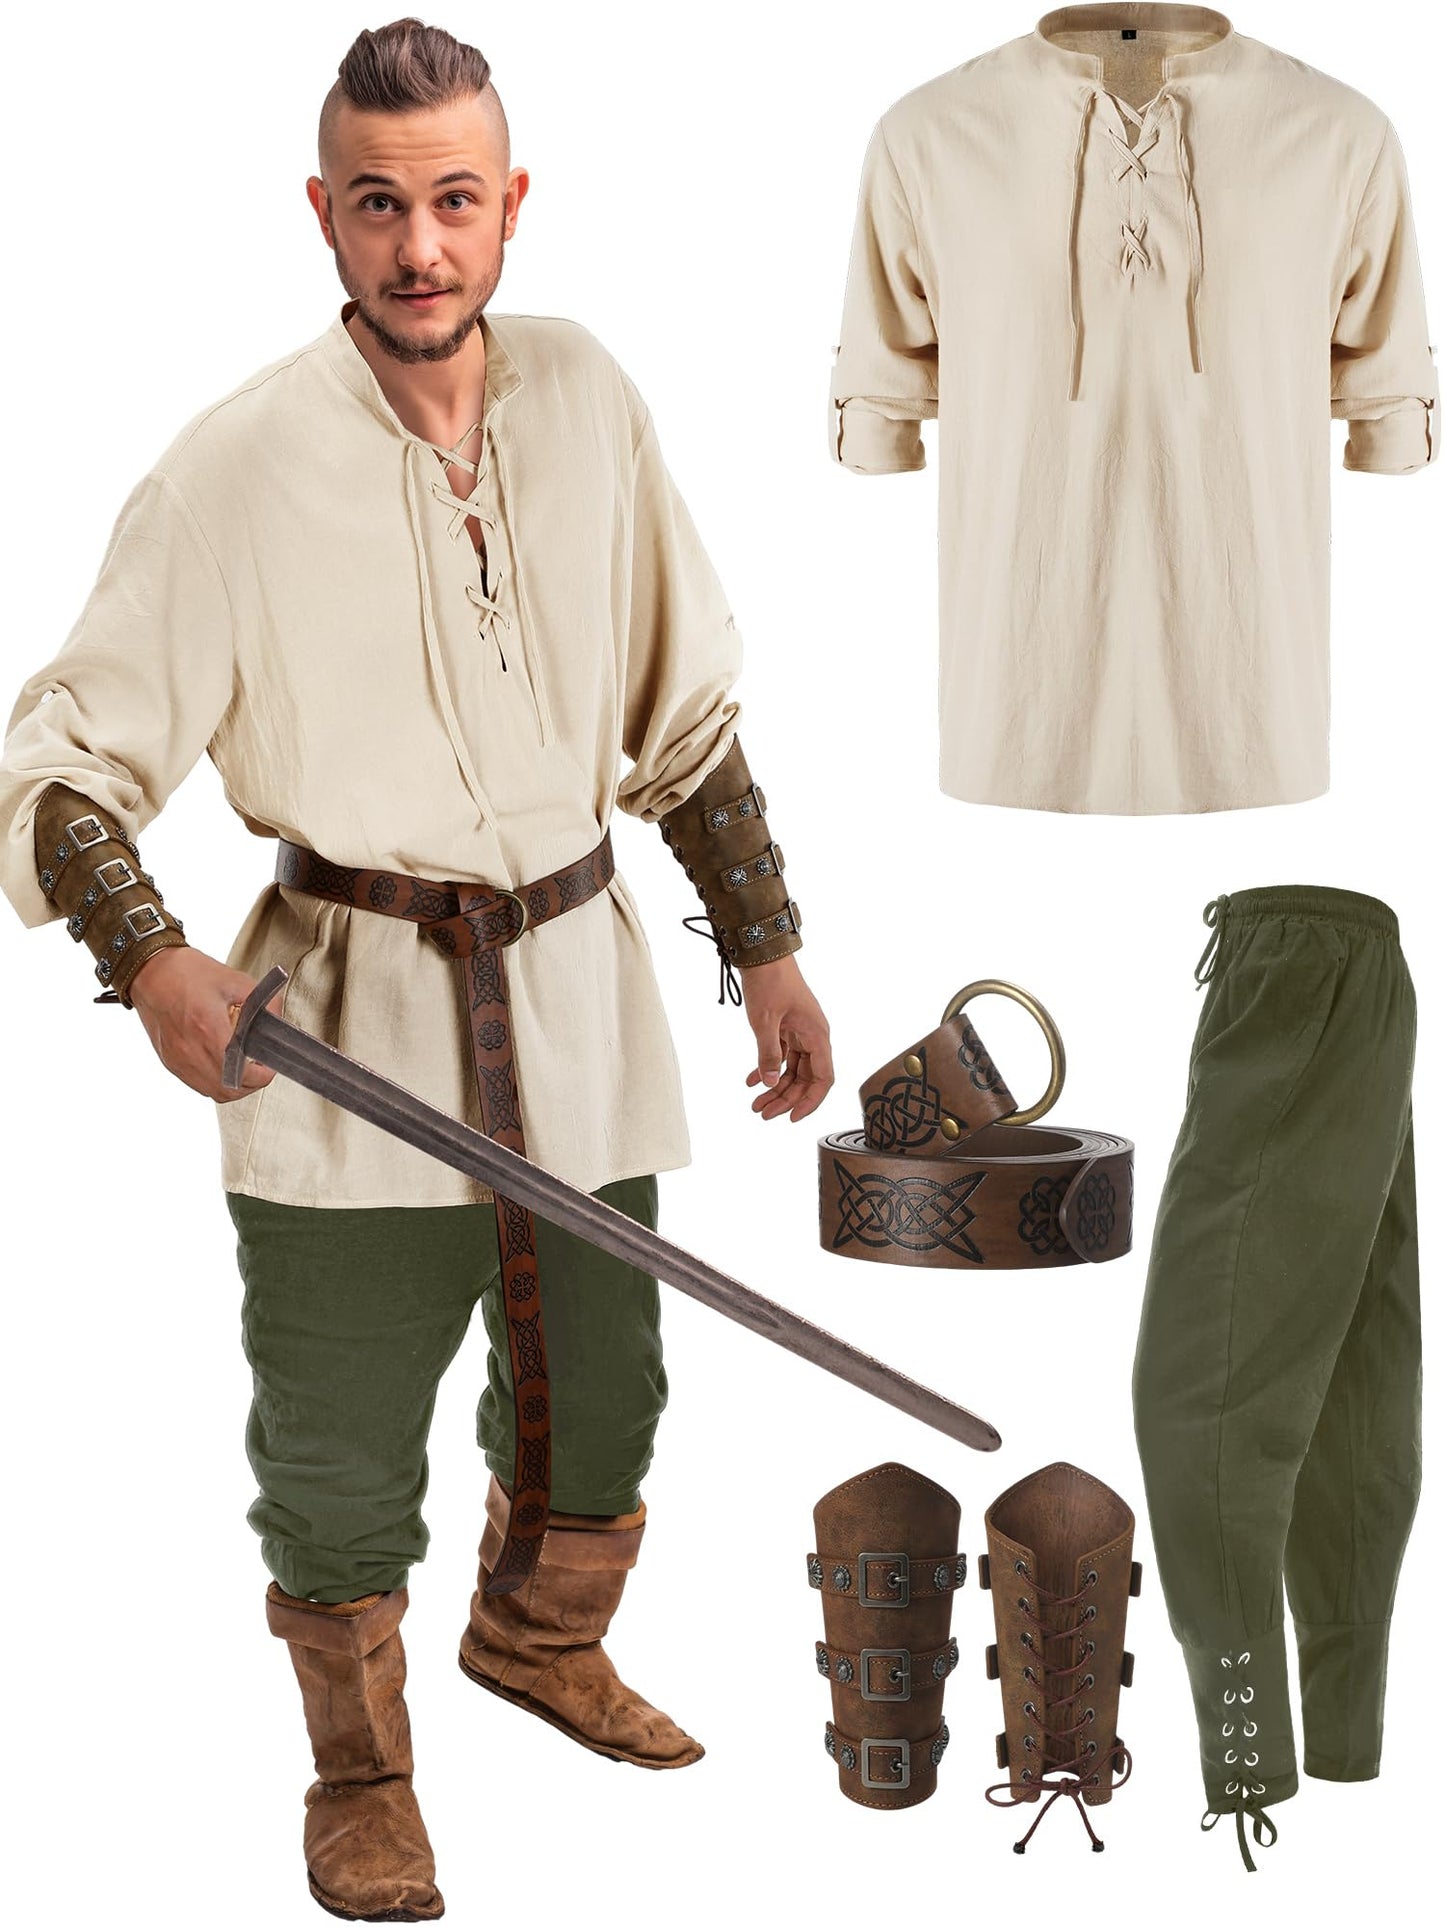 Jiuguva 4 Pcs Halloween Men's Renaissance Costume Set Medieval Pirate Shirt Ankle Banded Pants Viking Belt Accessories Stylish Color XX-Large